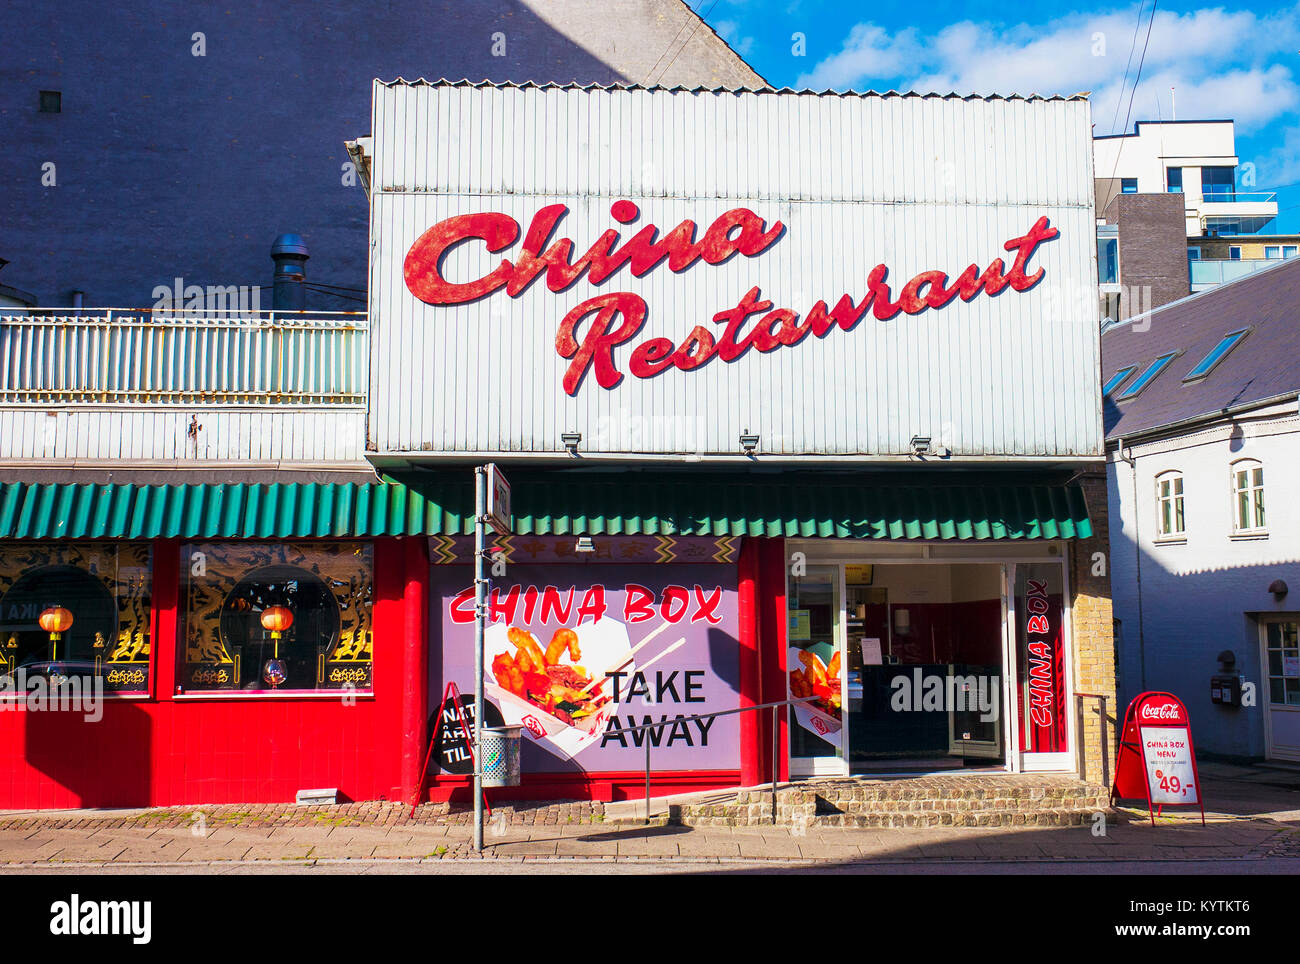 'China restaurant', billboard sign, Aalborg Denmark, China Box take away Stock Photo